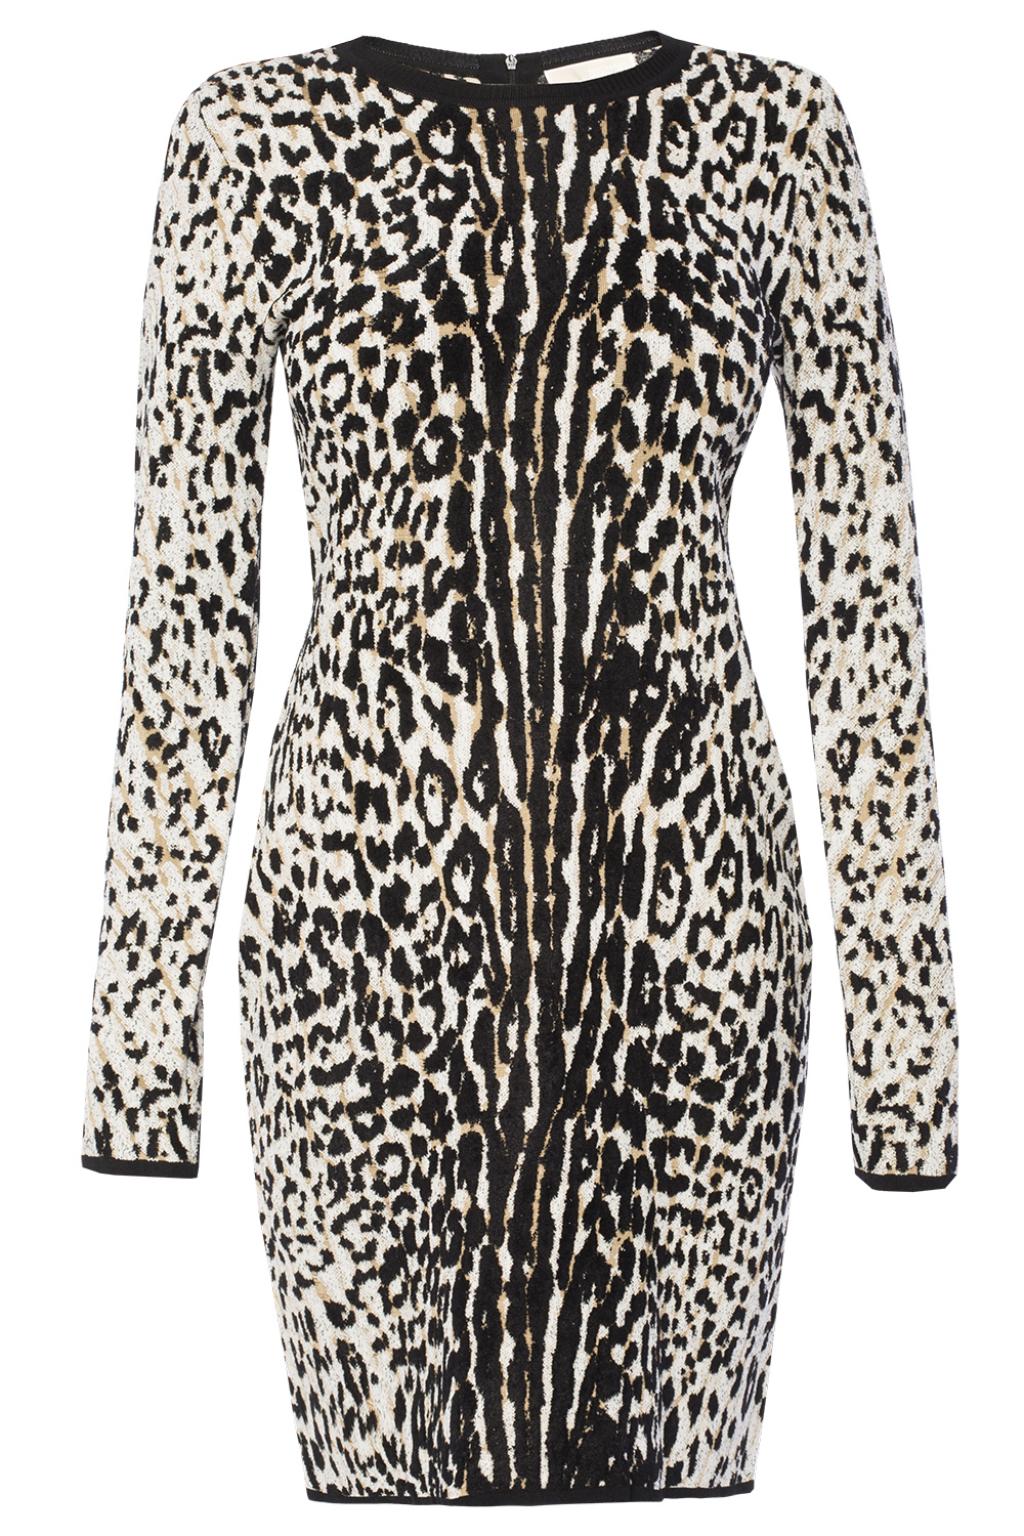 michael kors cheetah print dress